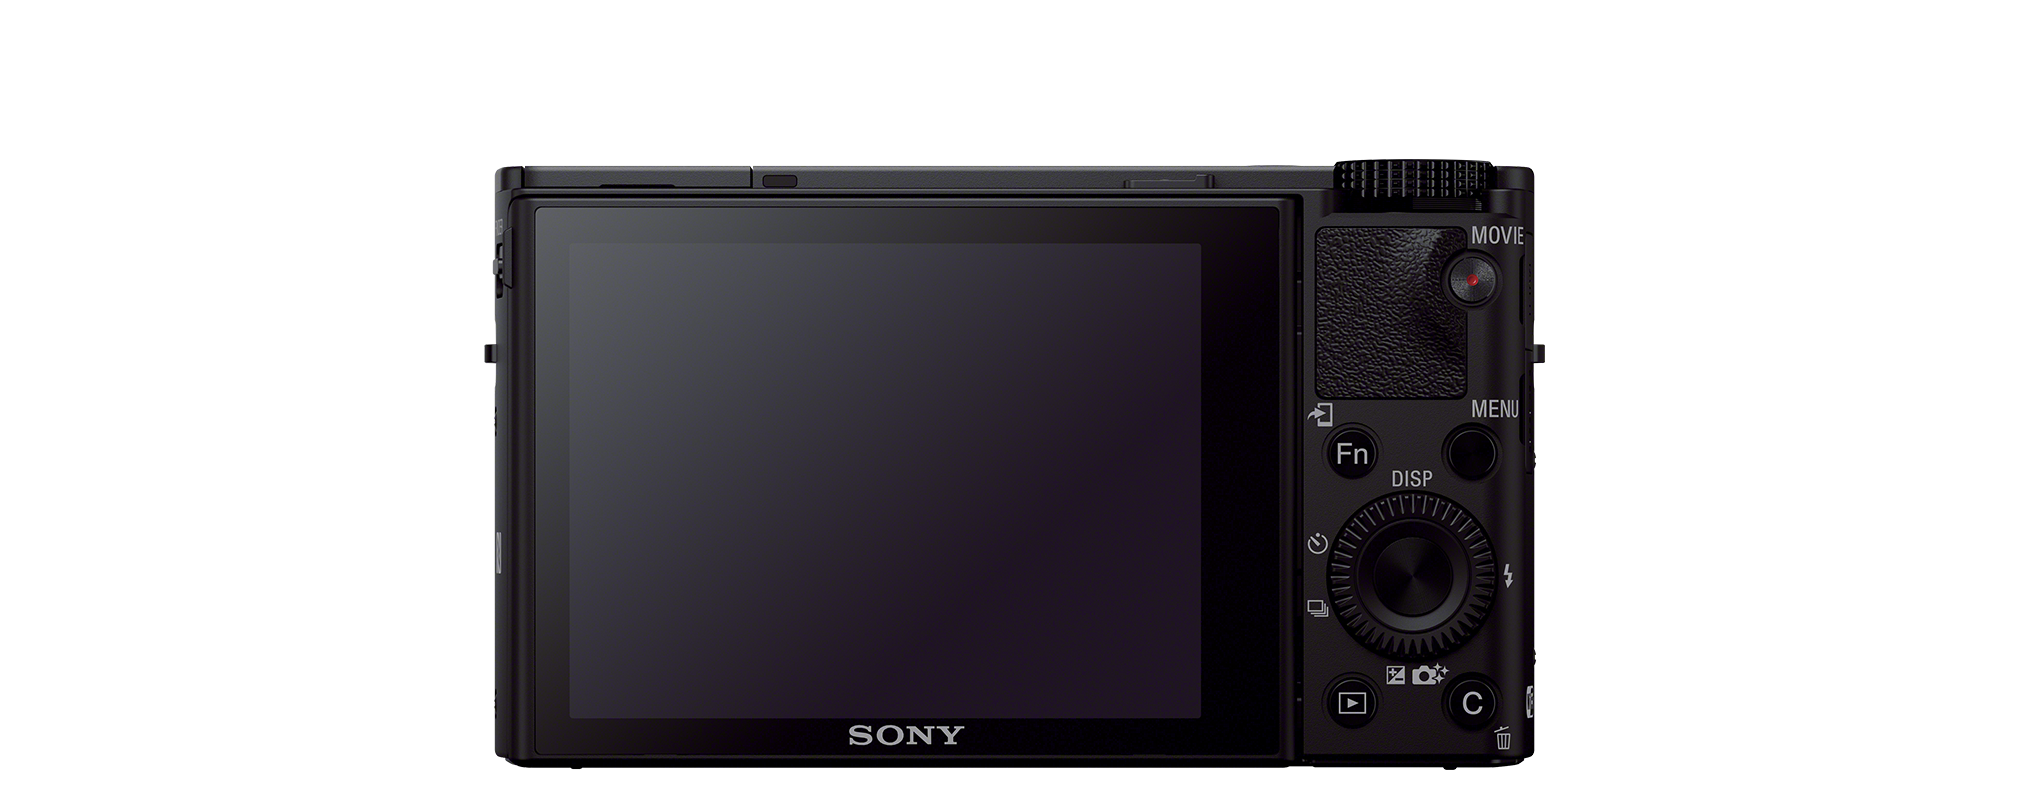 DSC-RX100M3/B Cyber-shot Digital Camera RX100 III - image 3 of 6